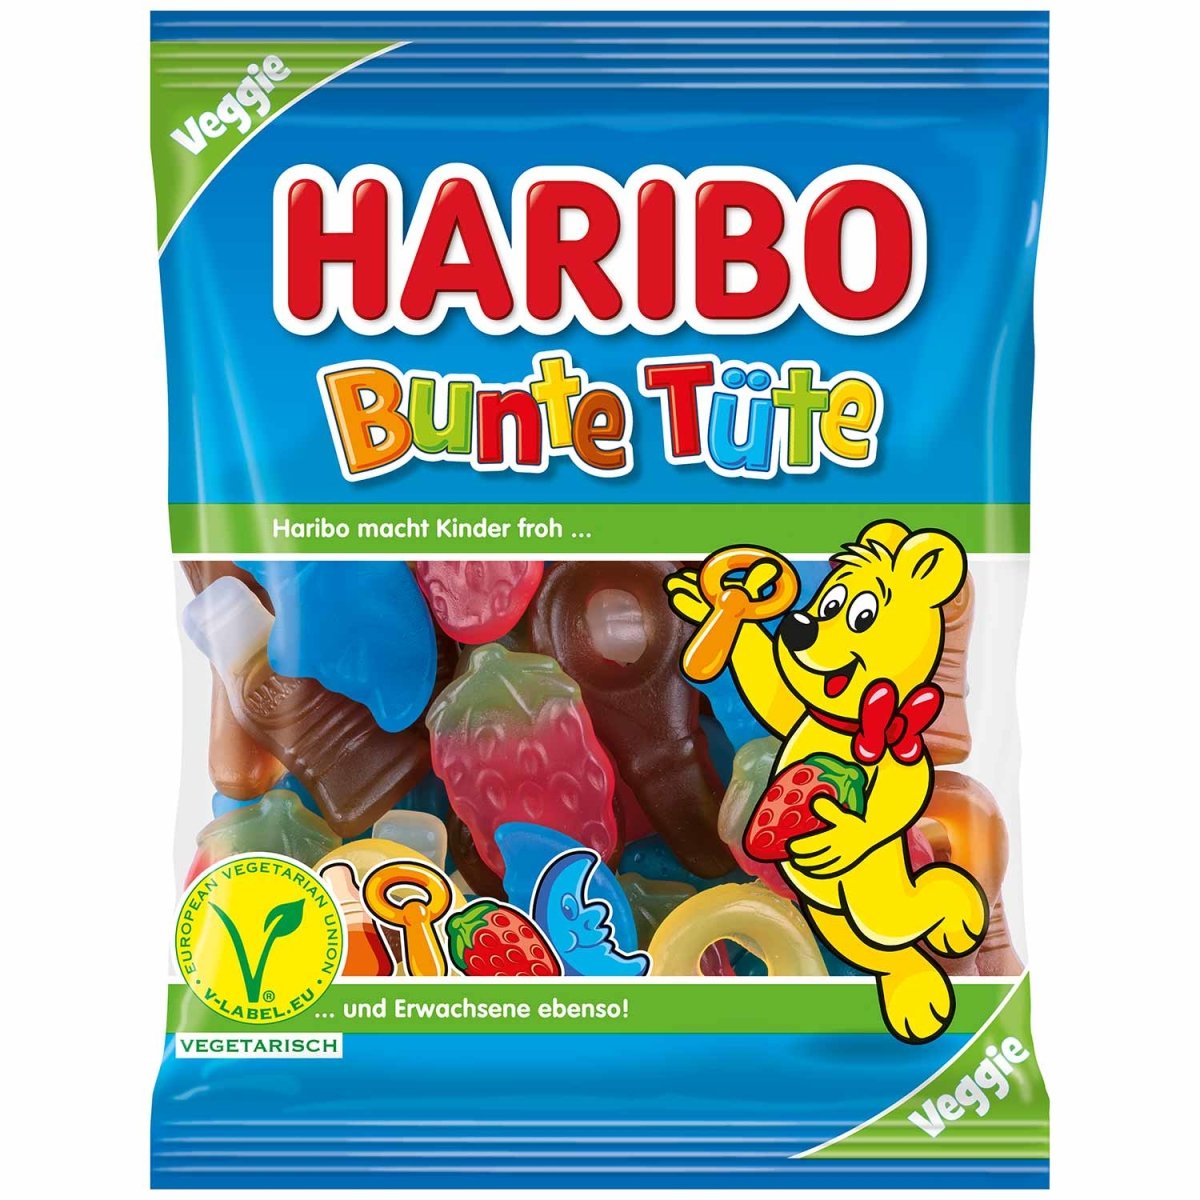 Haribo Bunte Tüte (Germany) 175g - Candy Mail UK